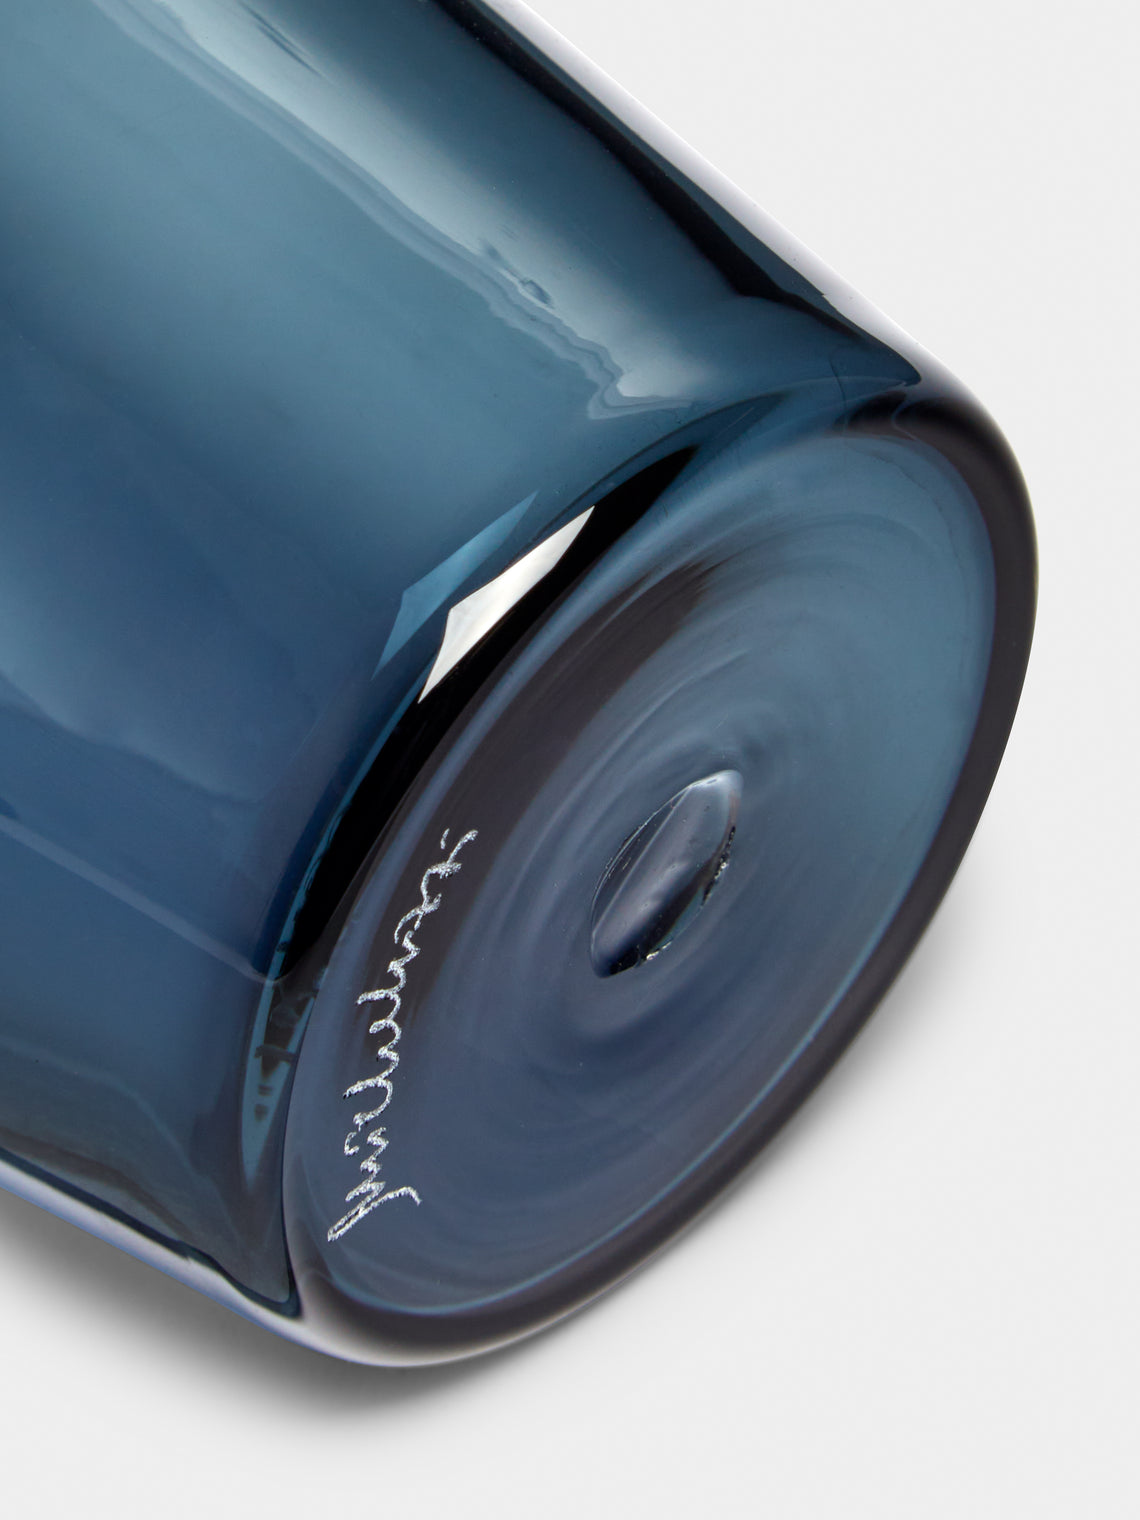 Micheluzzi Glass - Mosso Oceano Hand-Blown Murano Glass Tumbler - Blue - ABASK